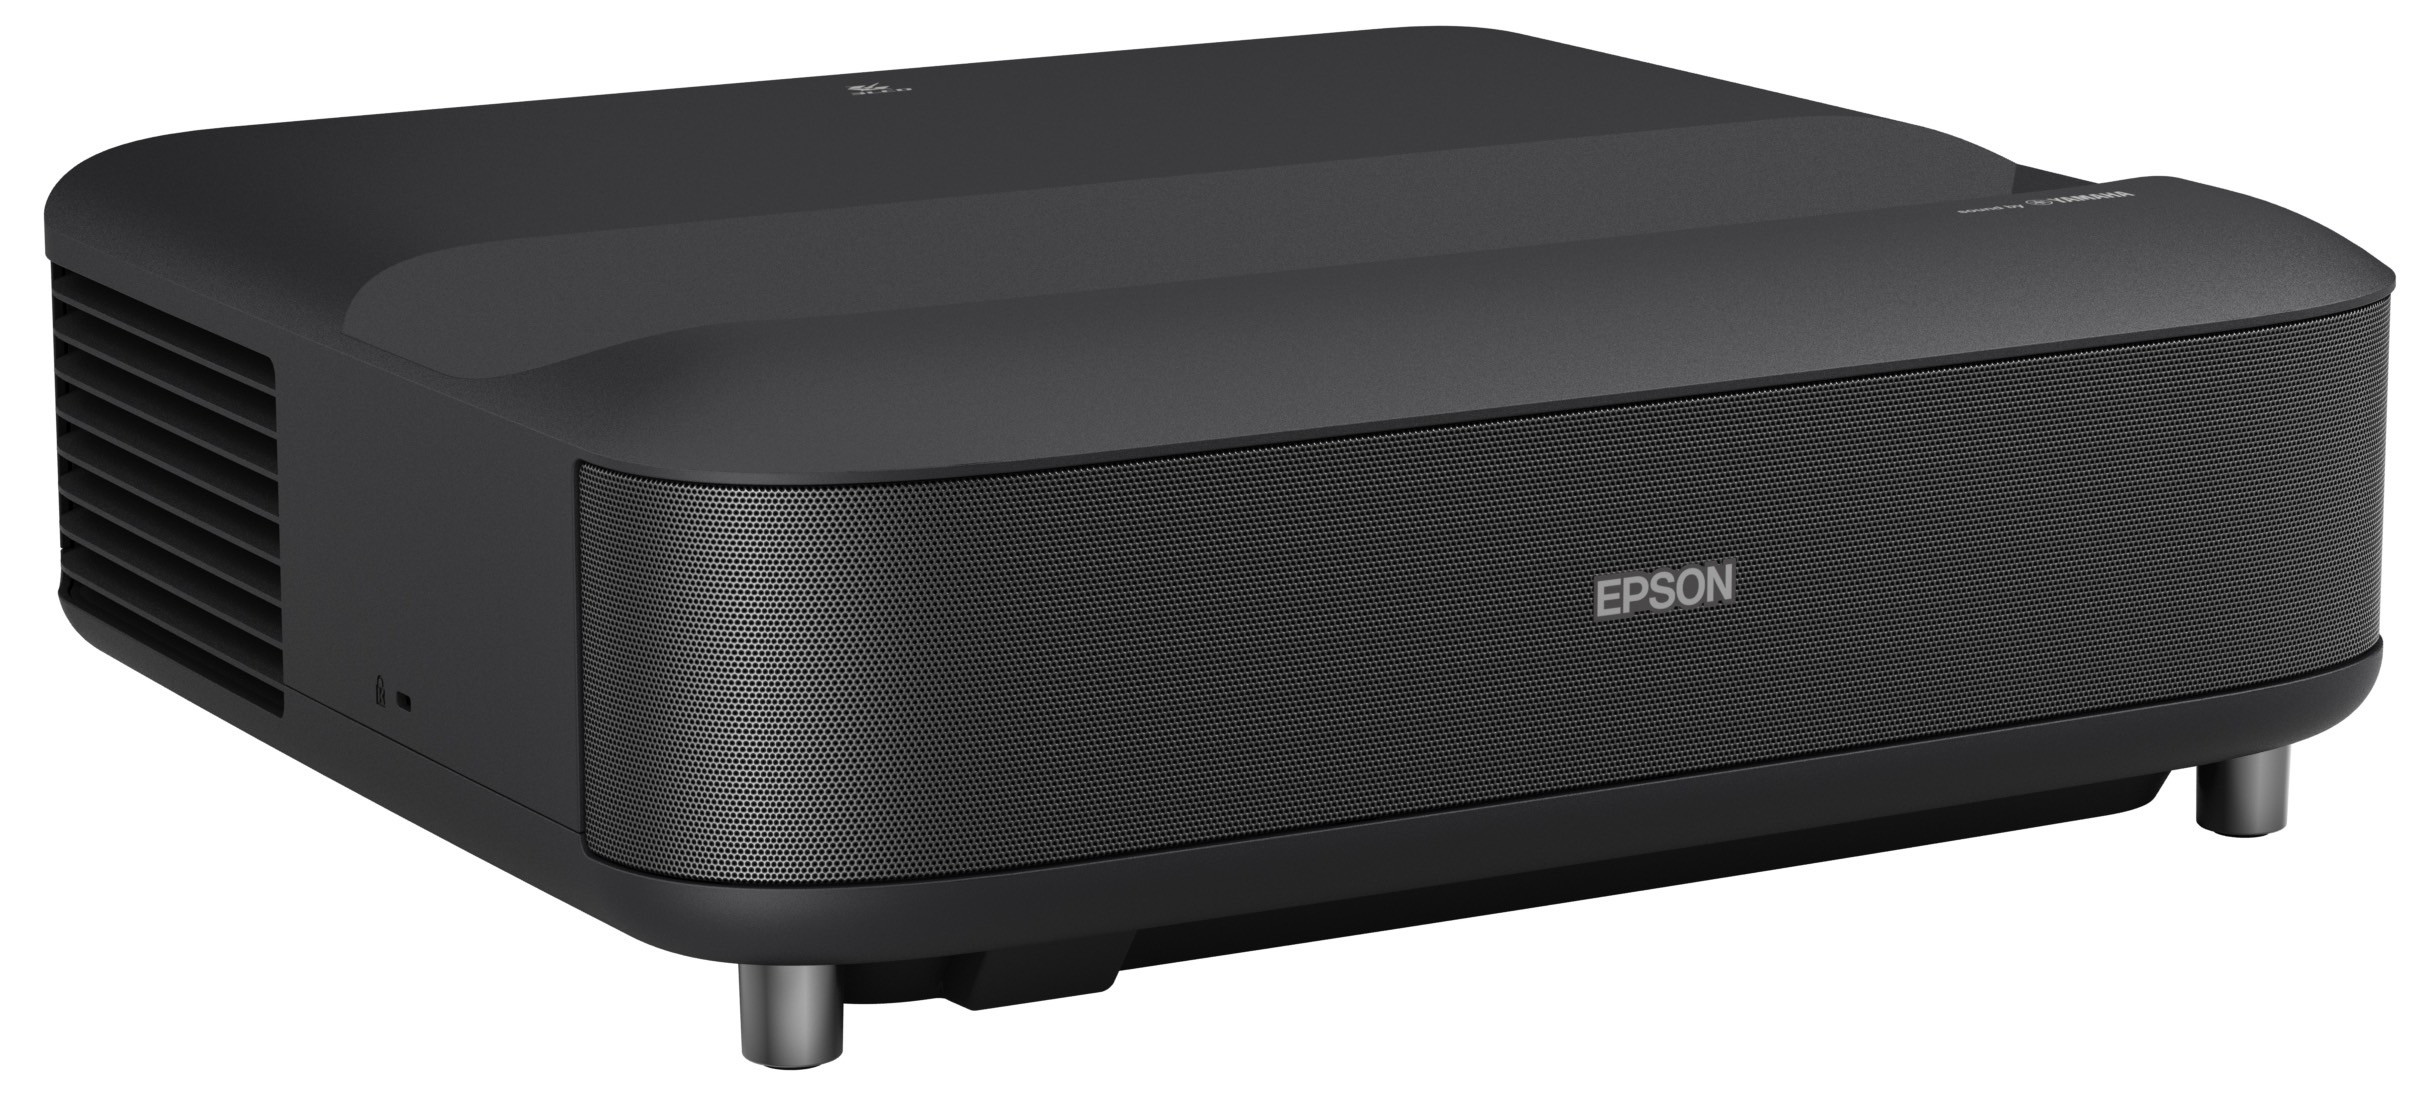 Epson EpiqVision Ultra LS650 in black.